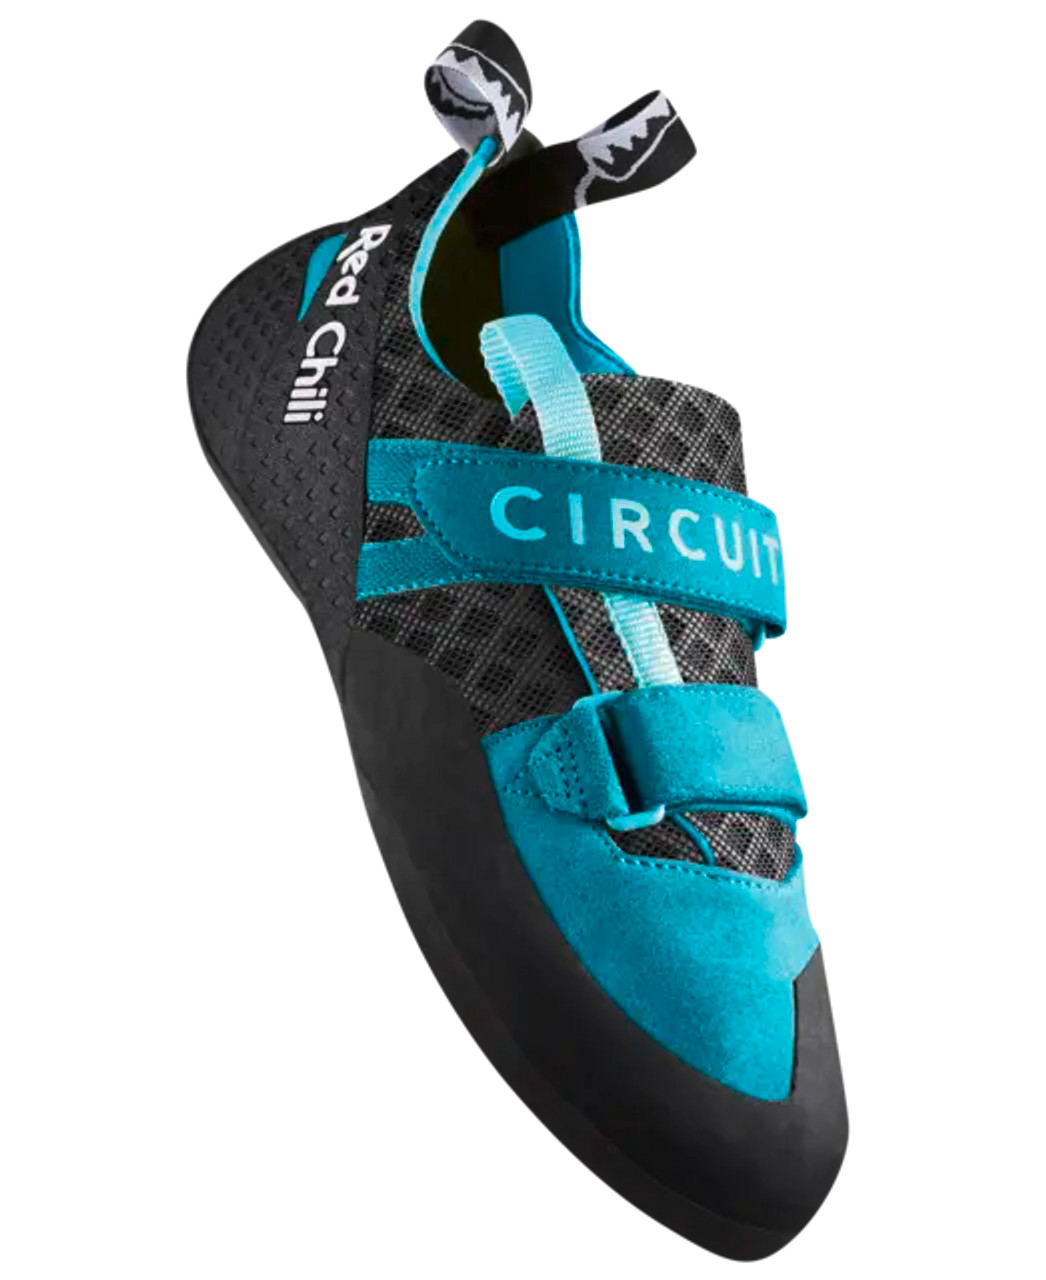 Edelrid Red Chili Circuit Climbing Shoe